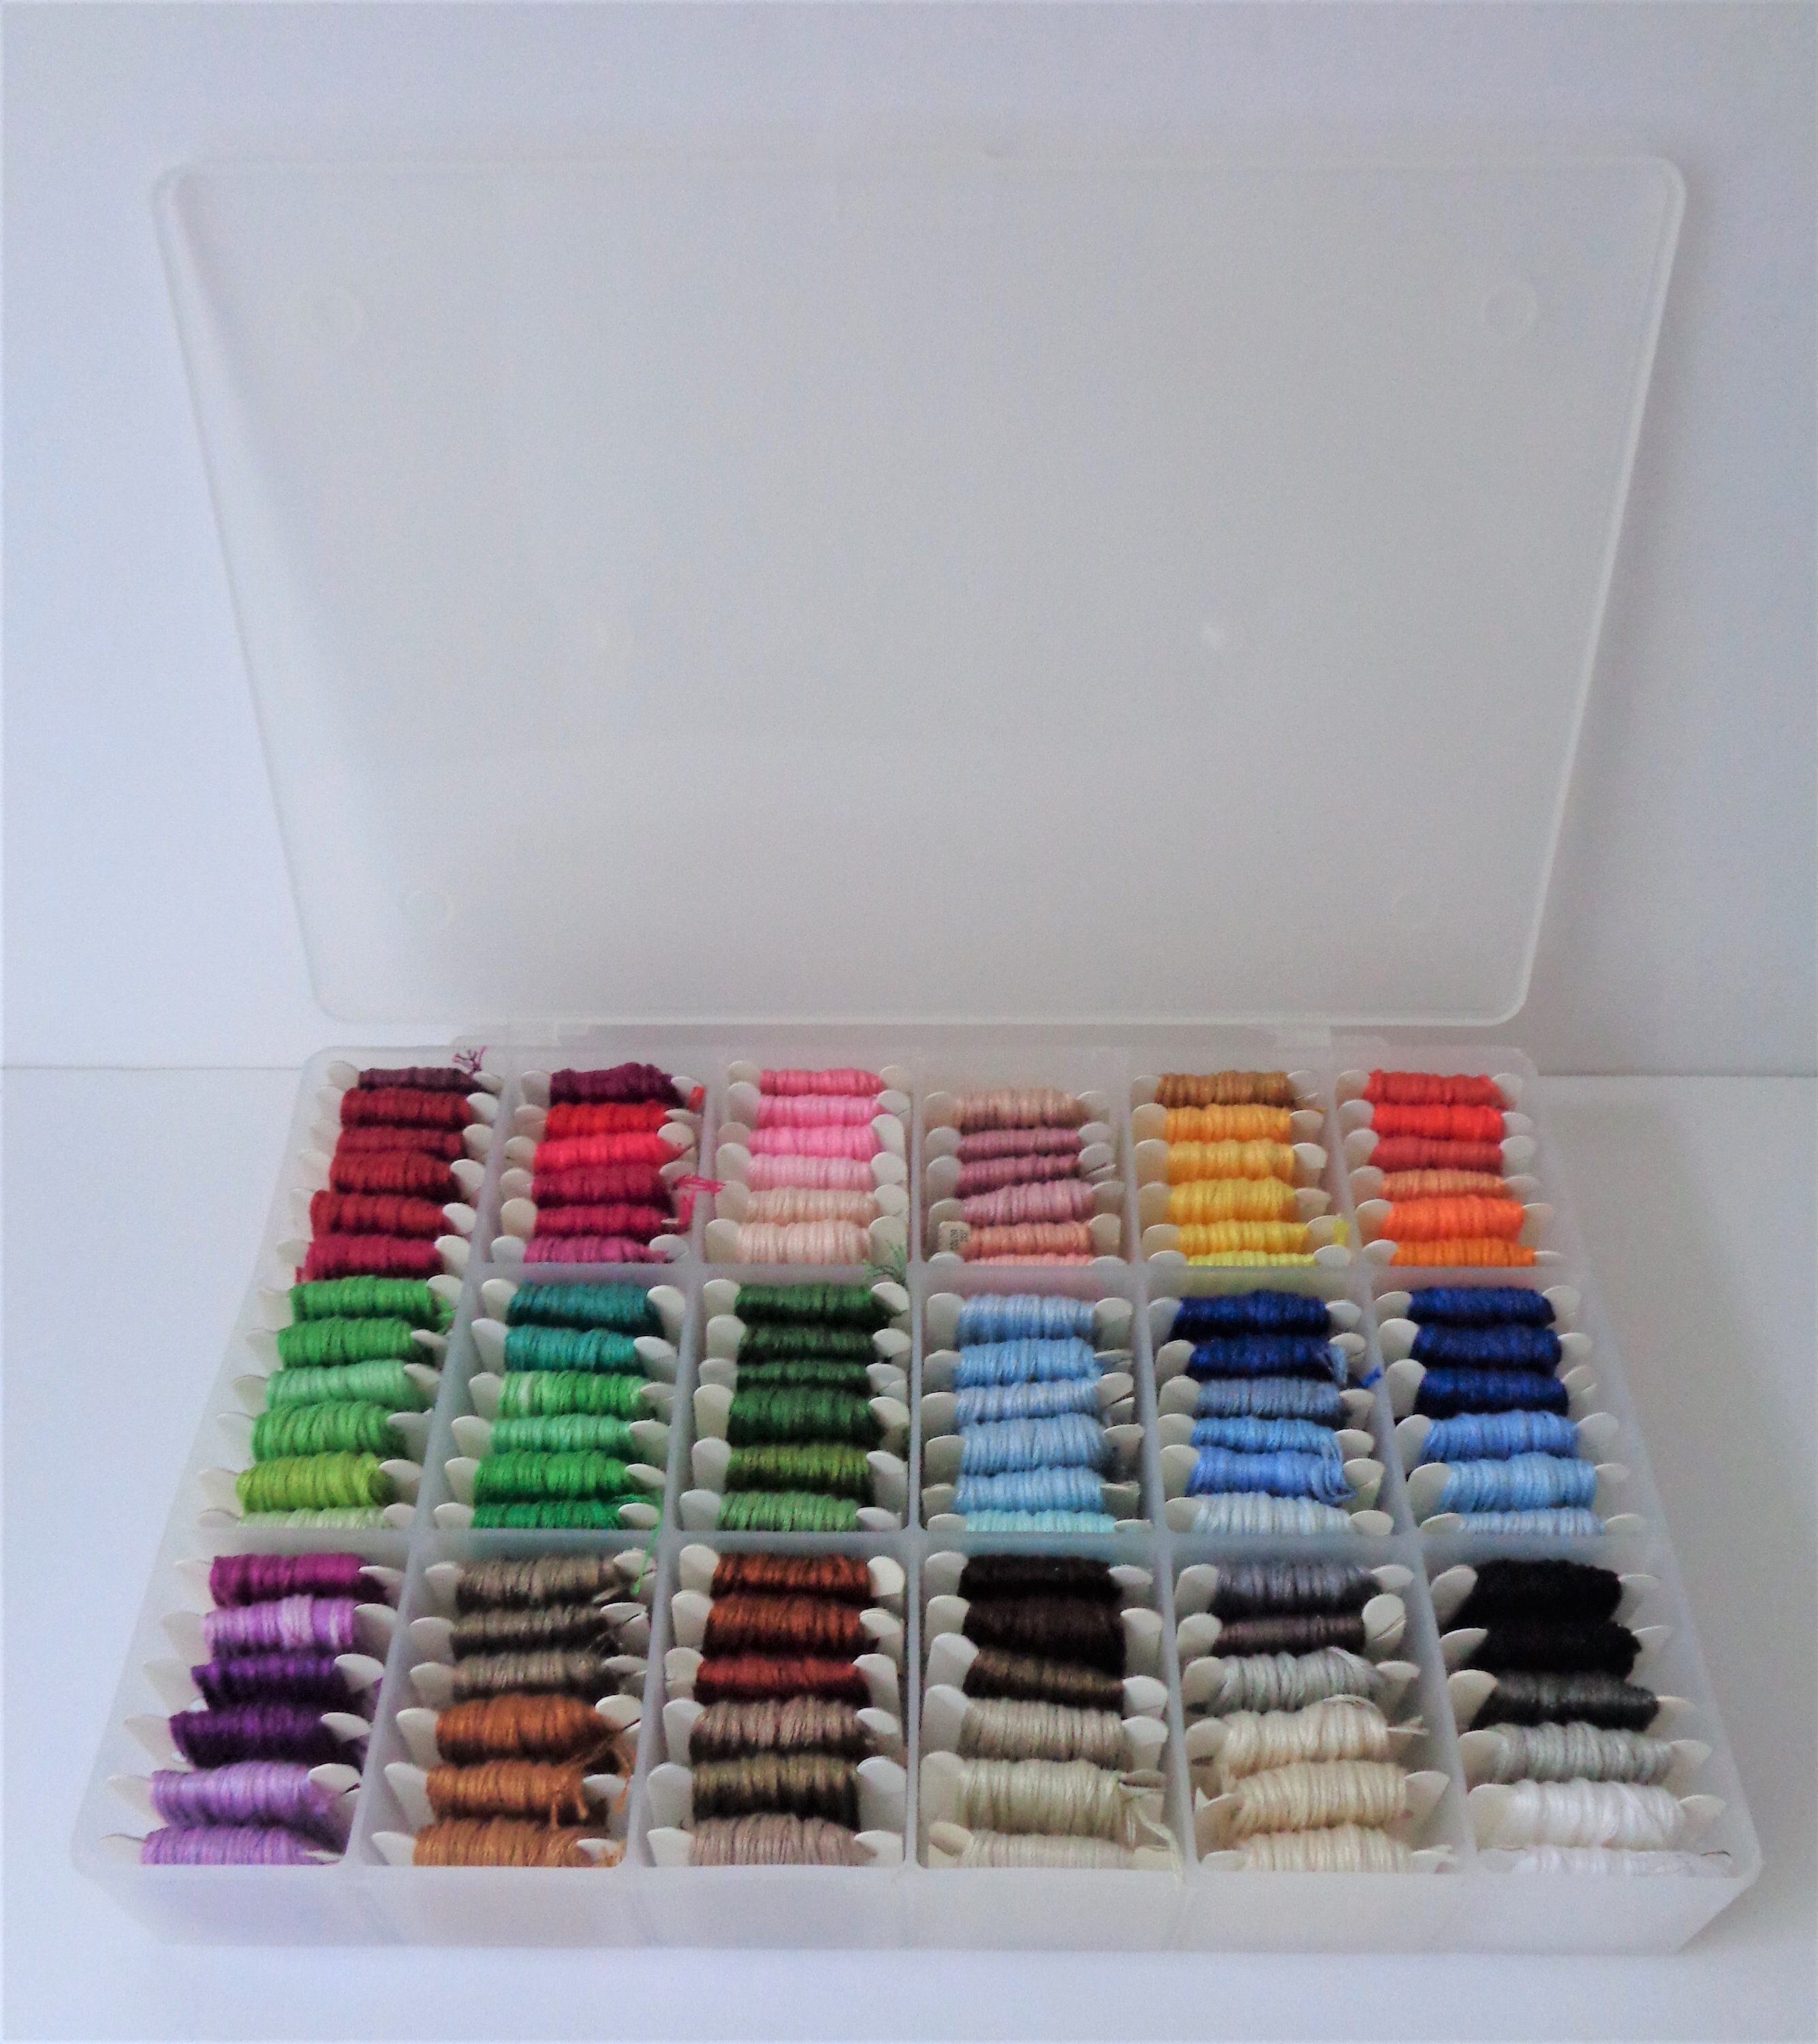 96 Colors Embroidery Floss Organizer Storage Box Friendship Bracelet